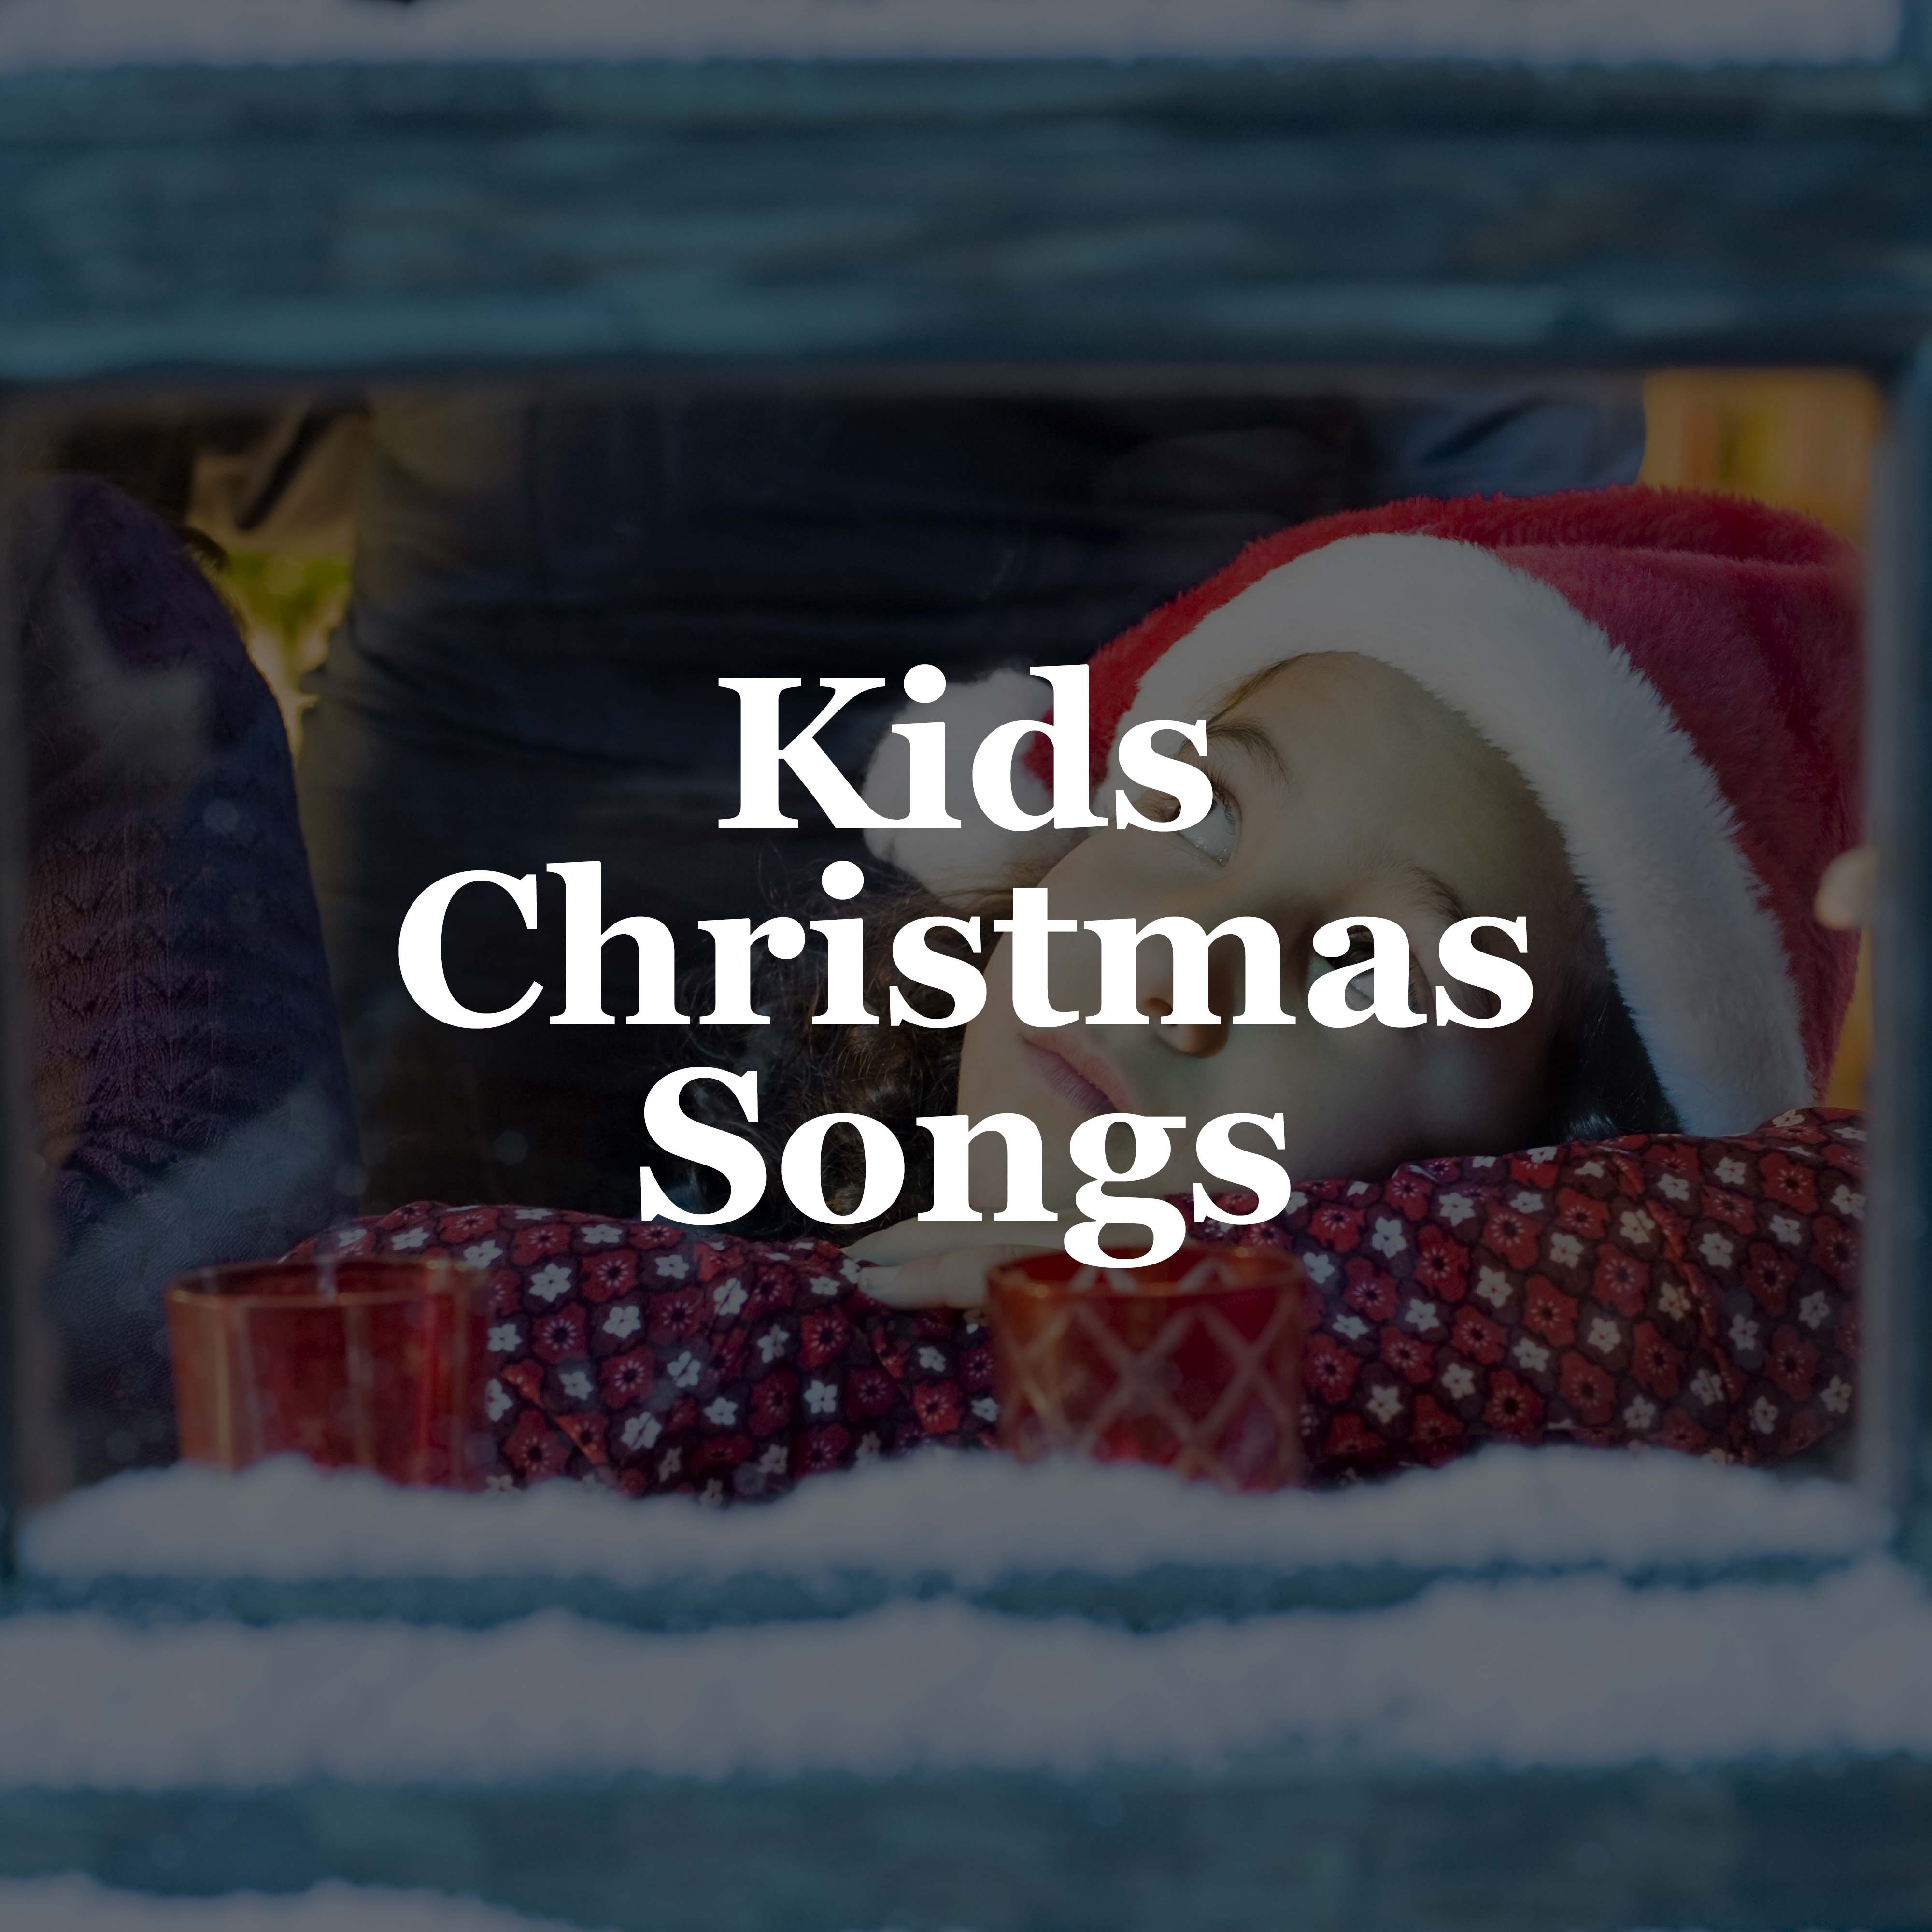 Kids Christmas Songs: Christmas Songs for Kids